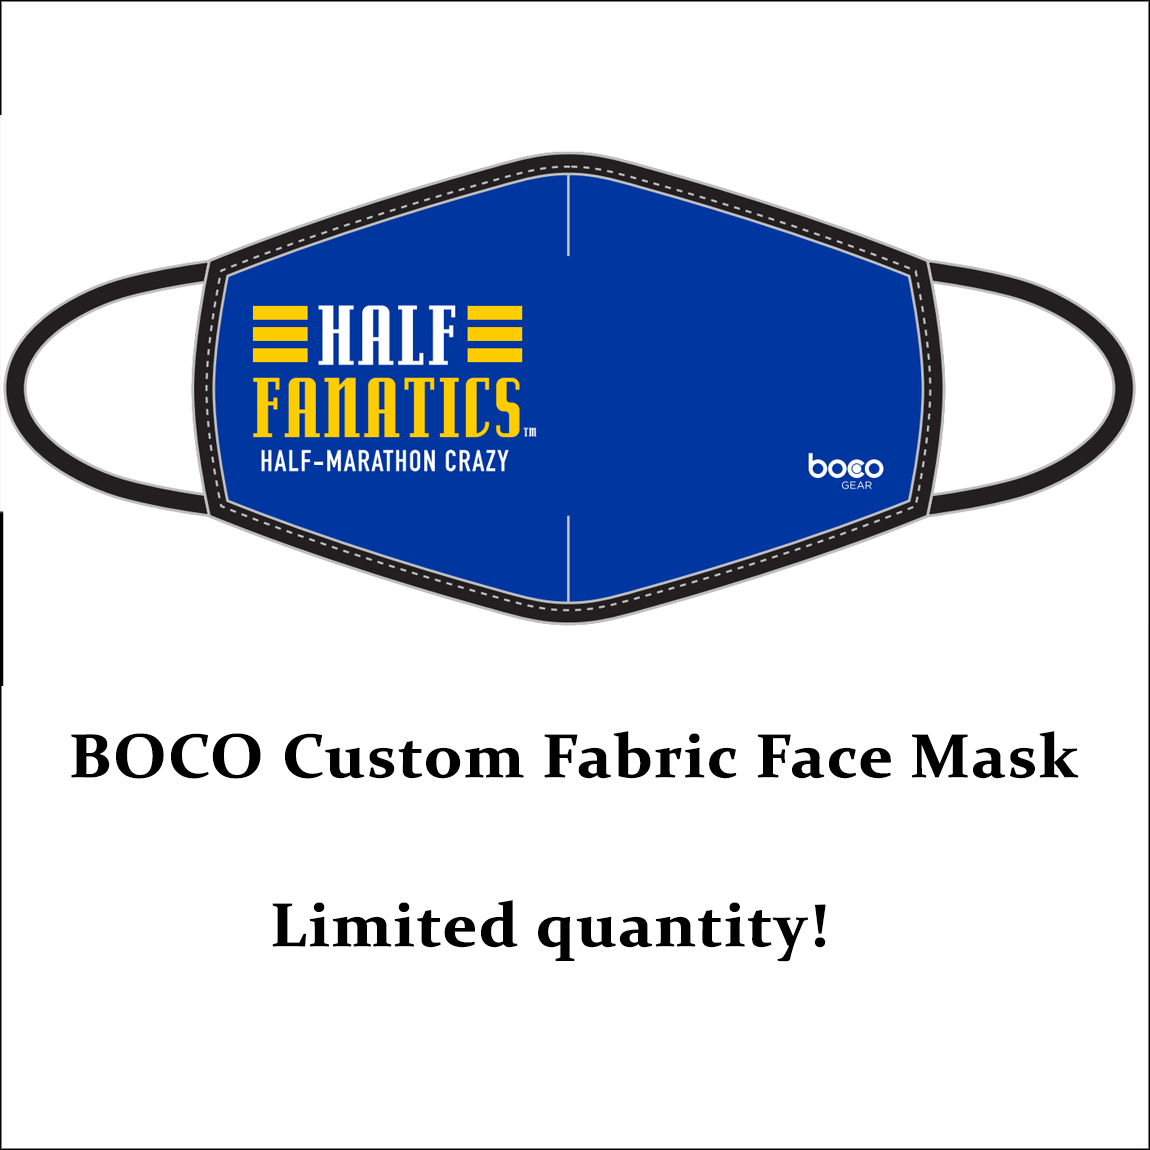 Half Fanatics "Blue" BOCO Custom Fabric Face Mask